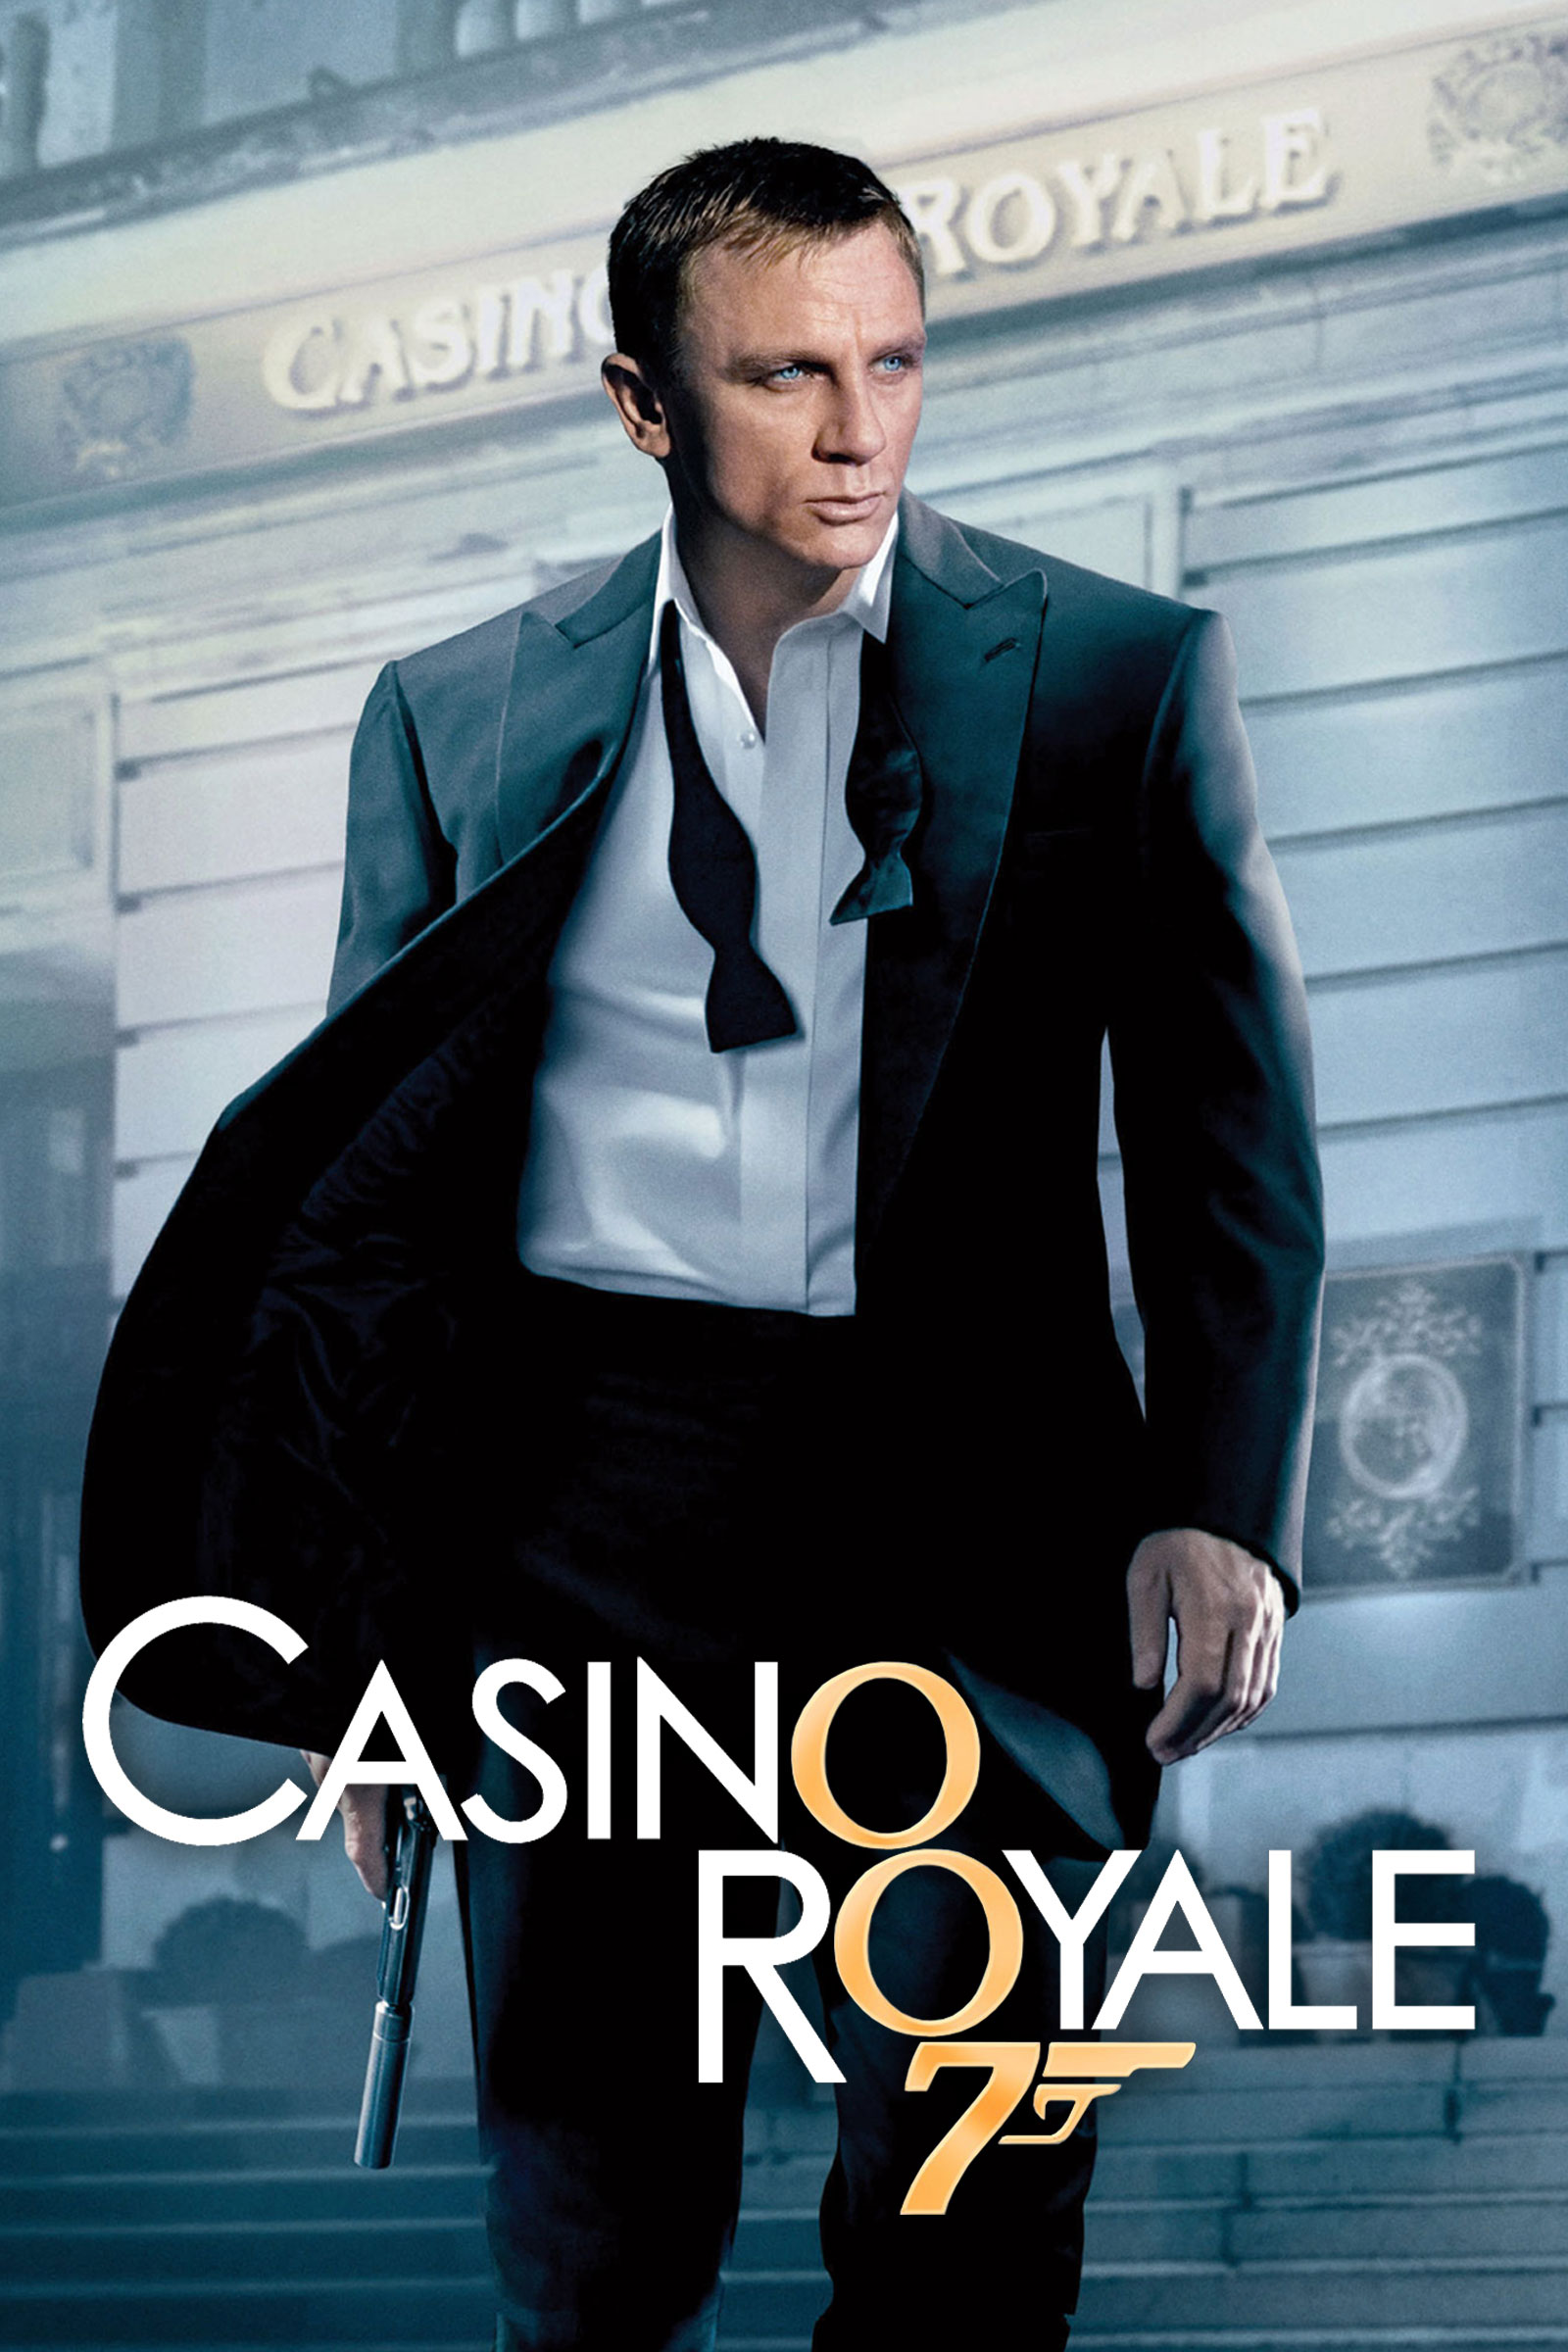 casino royale cc online free james bond